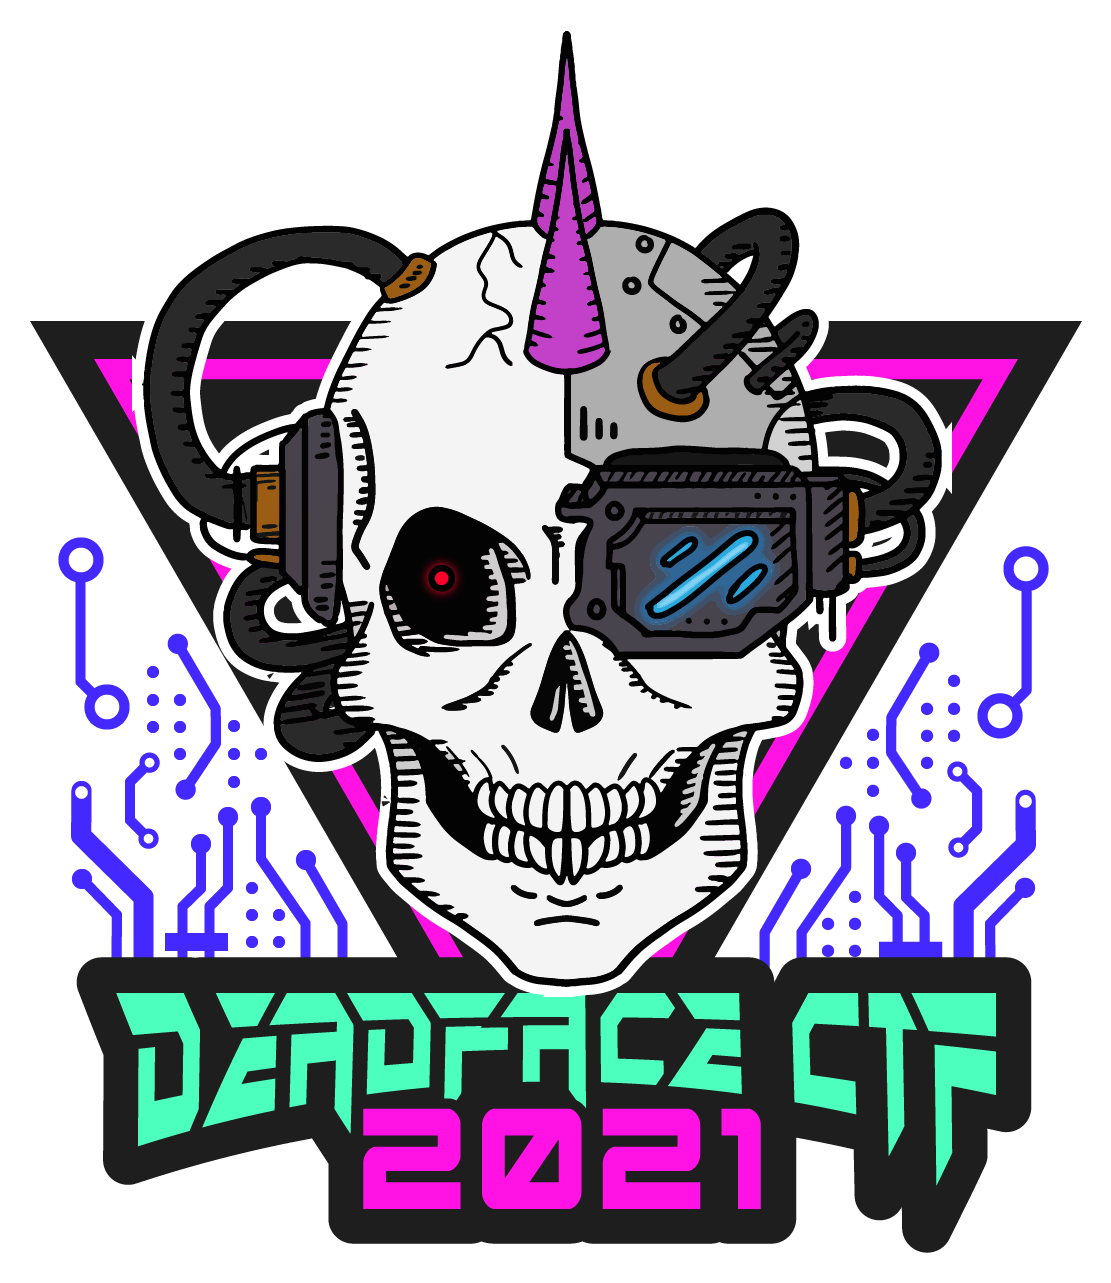 DEADFACE CTF 2021 logo